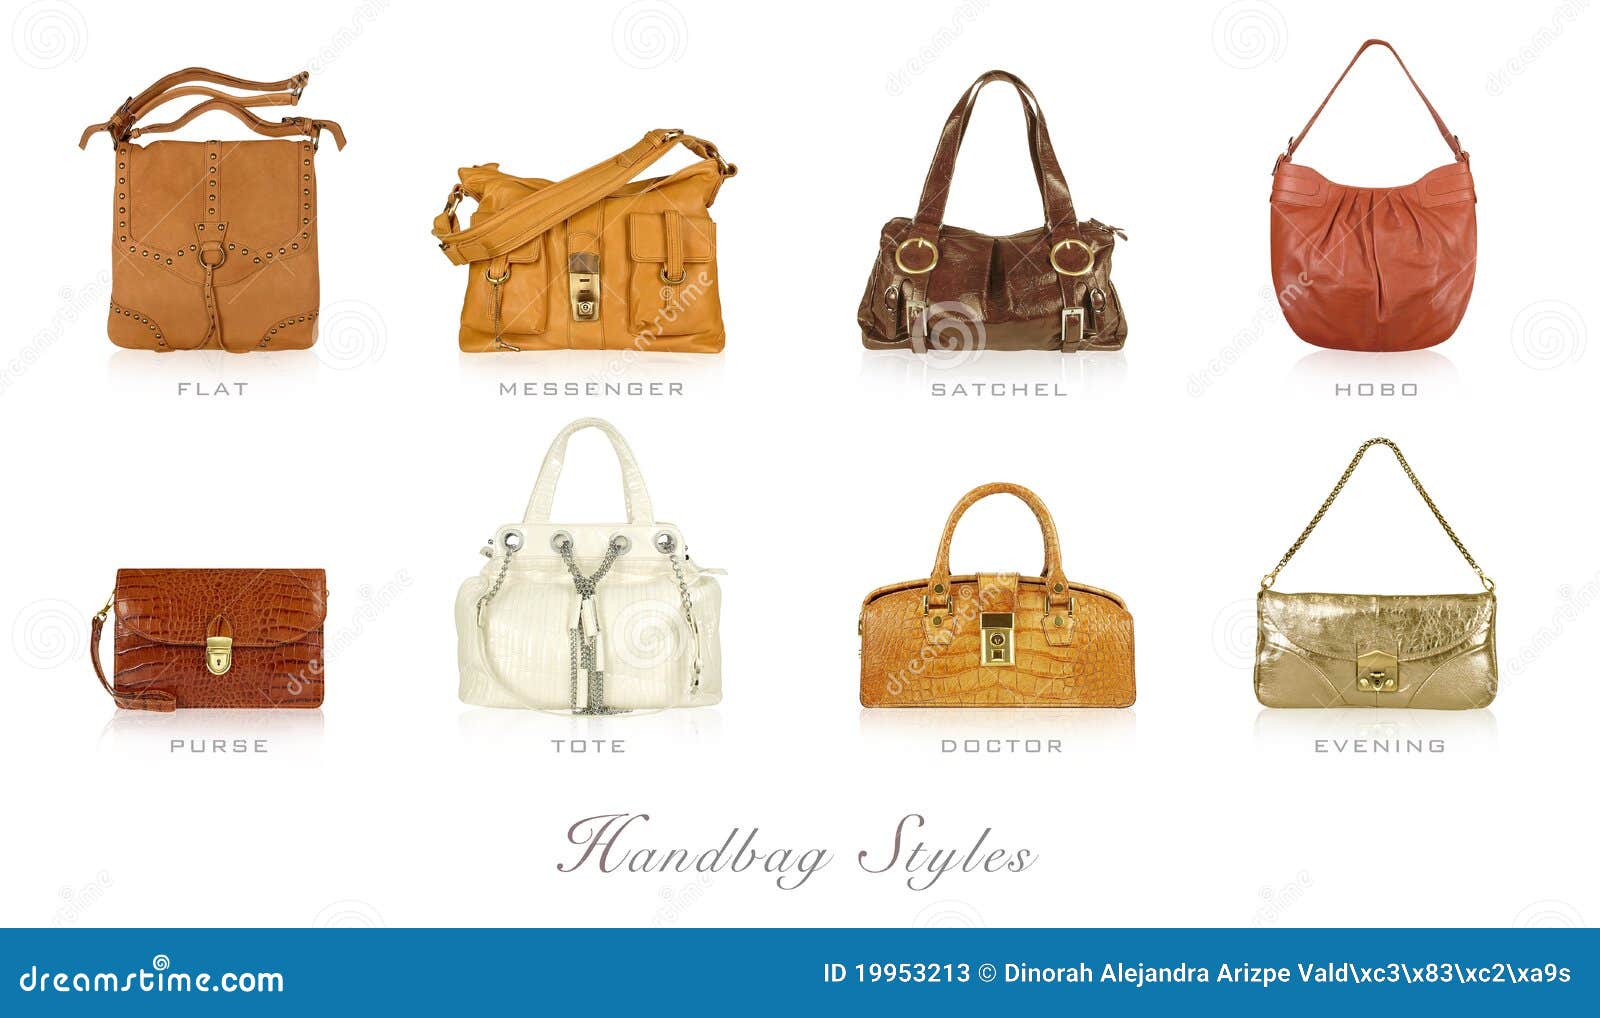 Handbag Styles Stock Photos - Image: 19953213